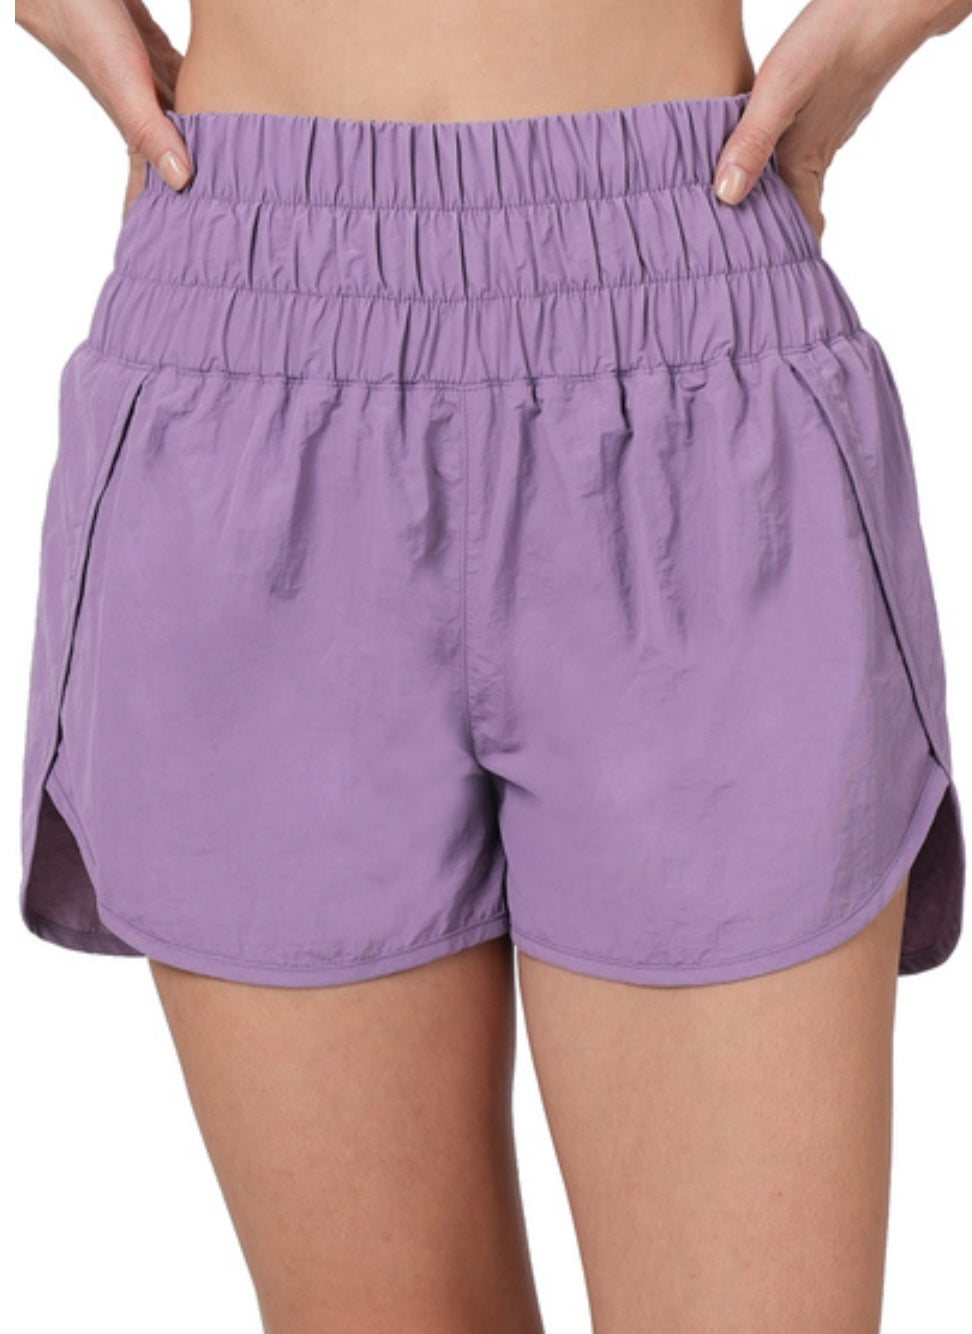 Smocked Waistband Shorts (4 Colors)